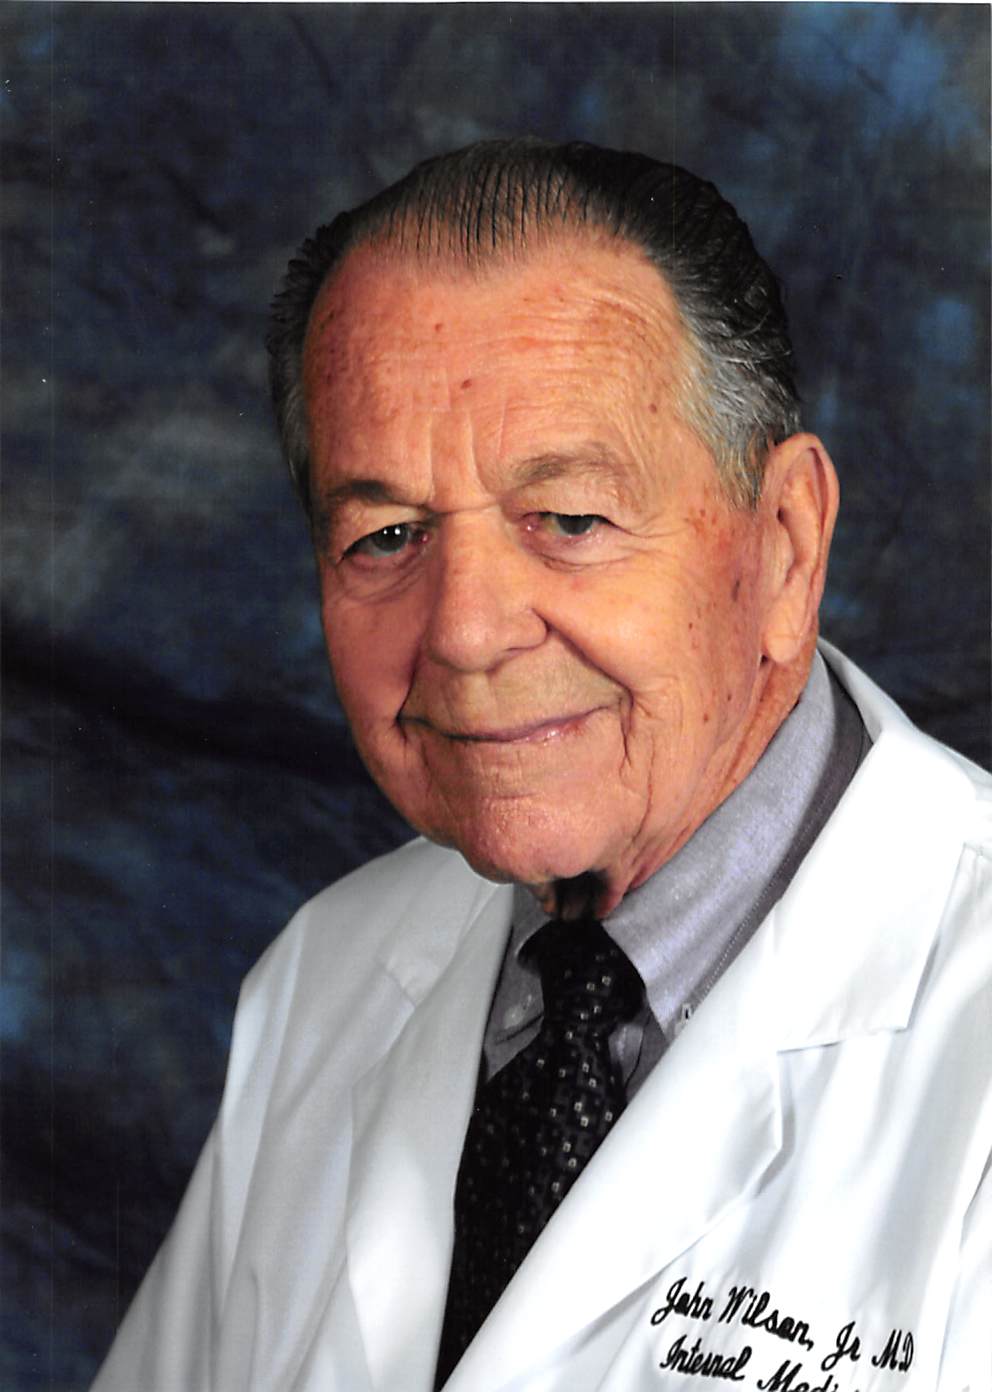 Dr John Wilson picture